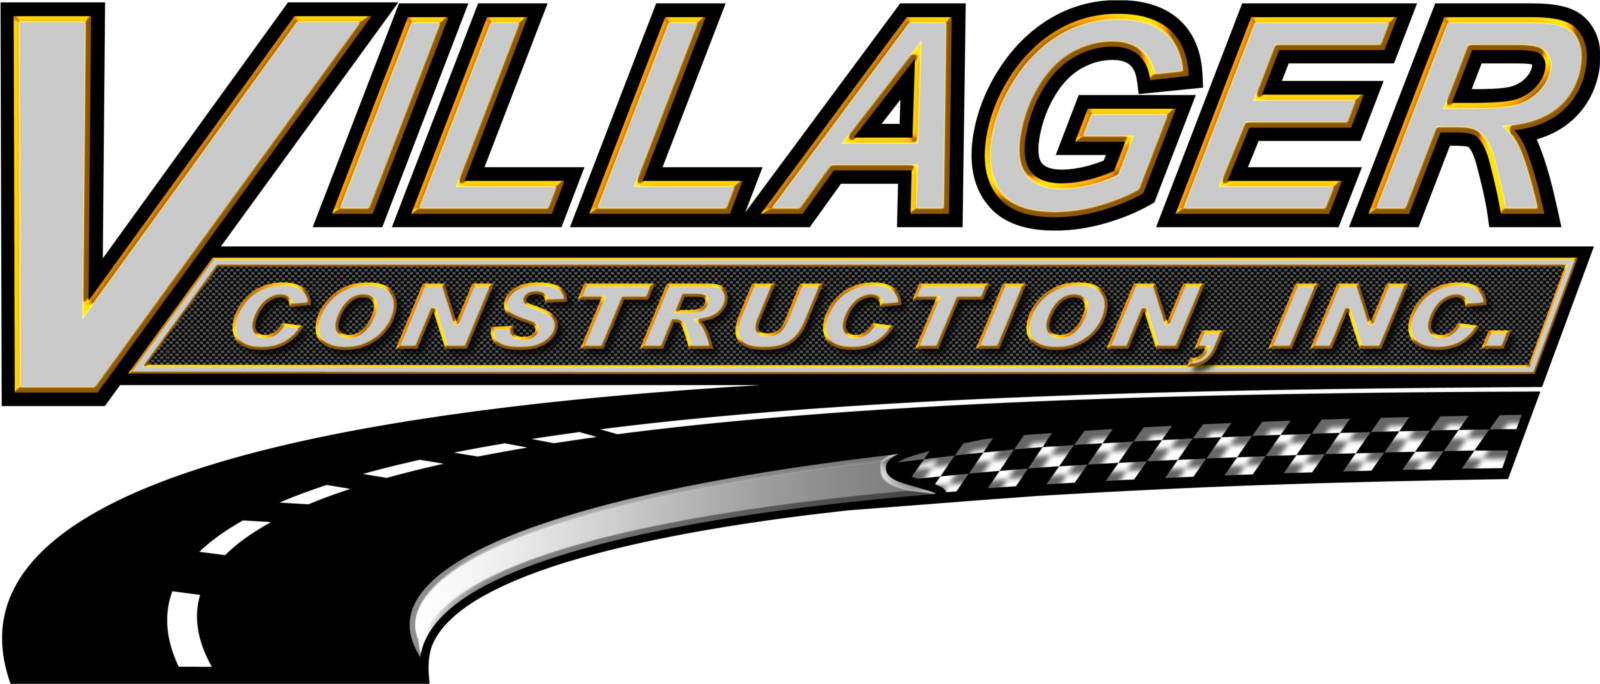 Villager Construction, Inc logo